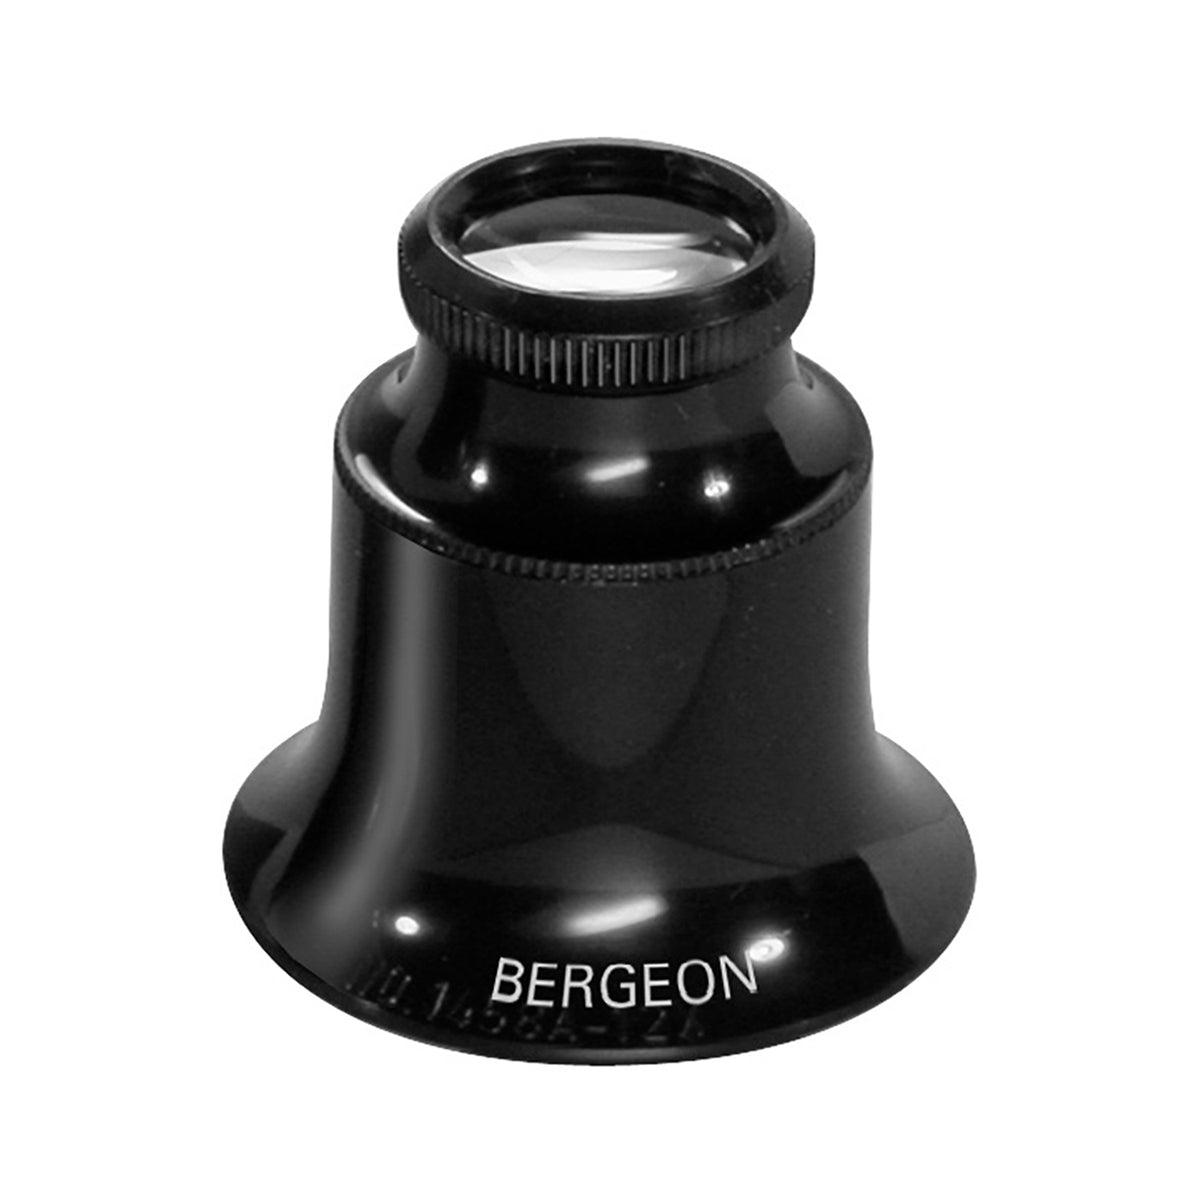 Bergeon 1458-A-15 Uhrmacherlupe, Kontroll-Okular, Vergrößerungshilfe, Triplet-Linse, 15x, zerlegbar